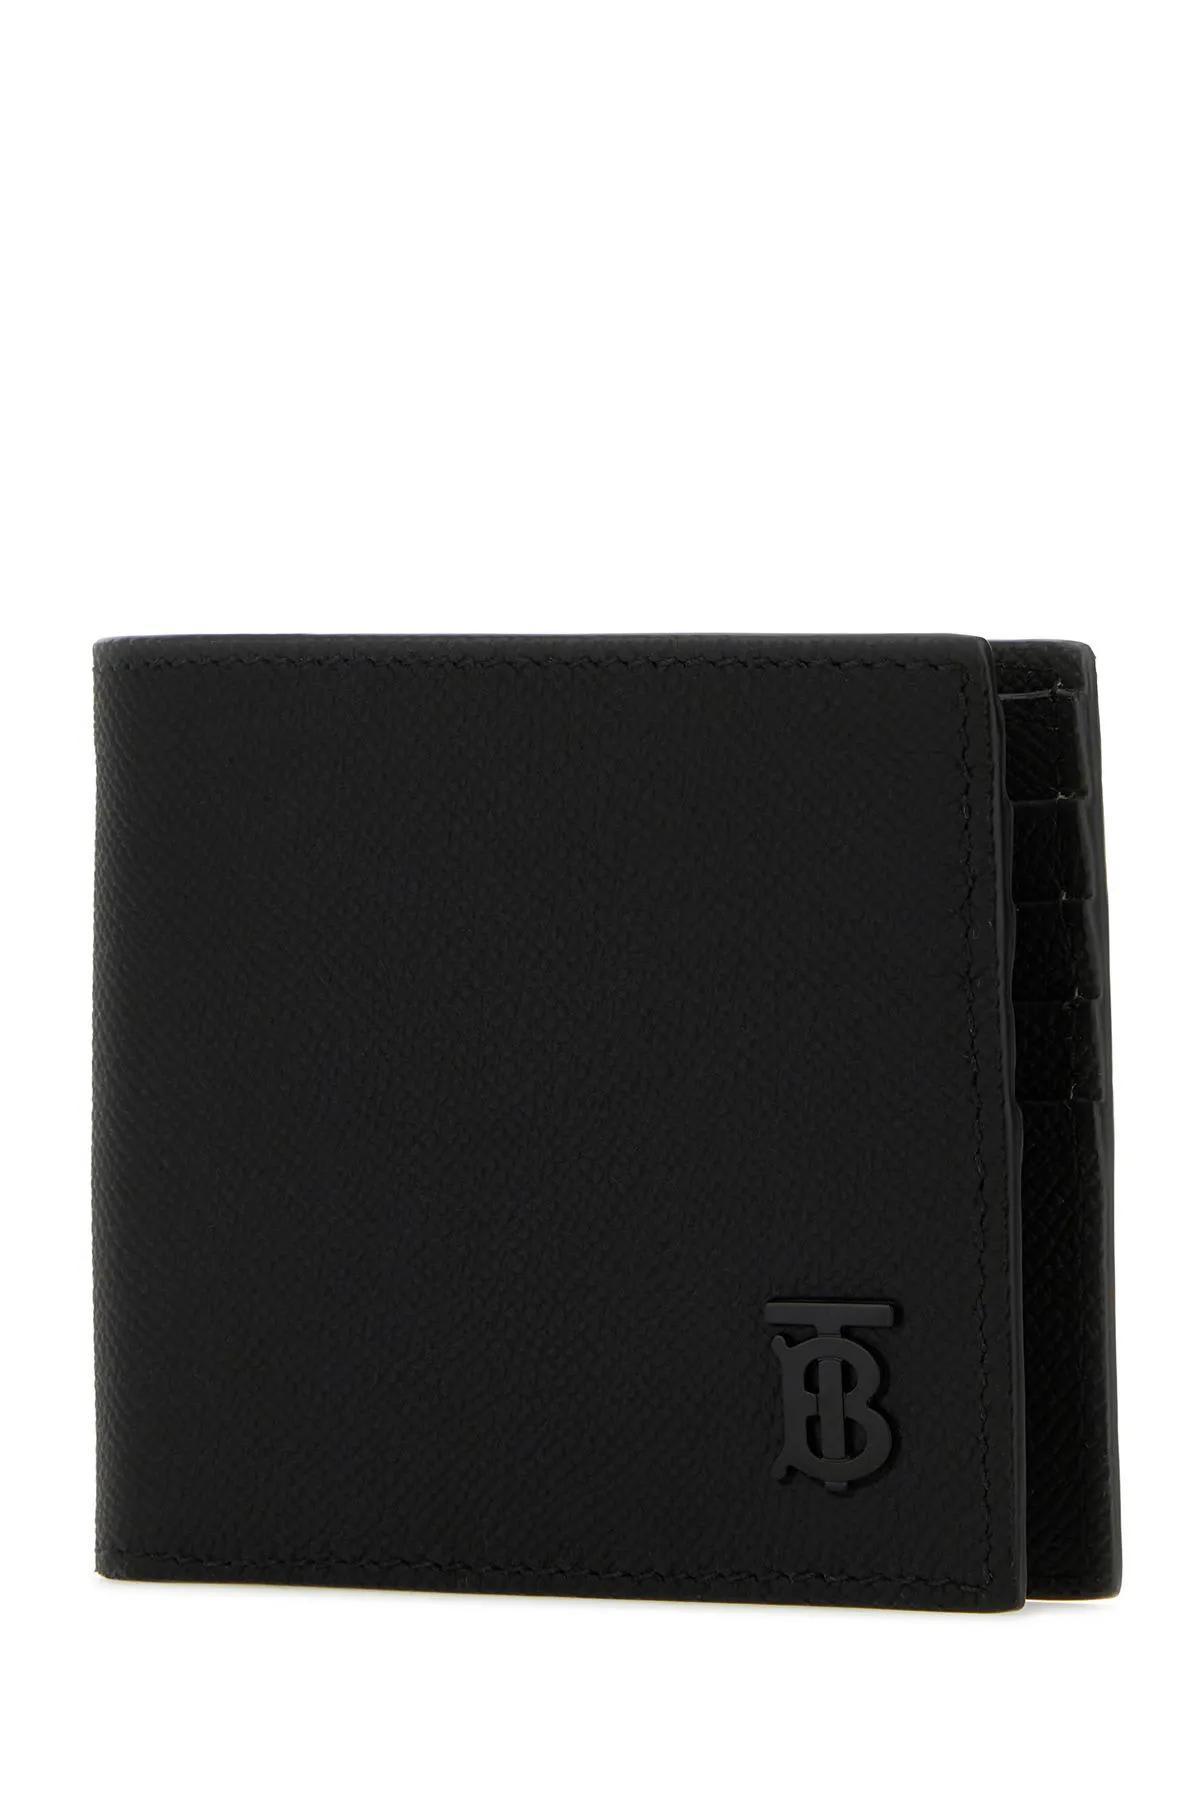 Burberry - TB Monogram Bifold Wallet